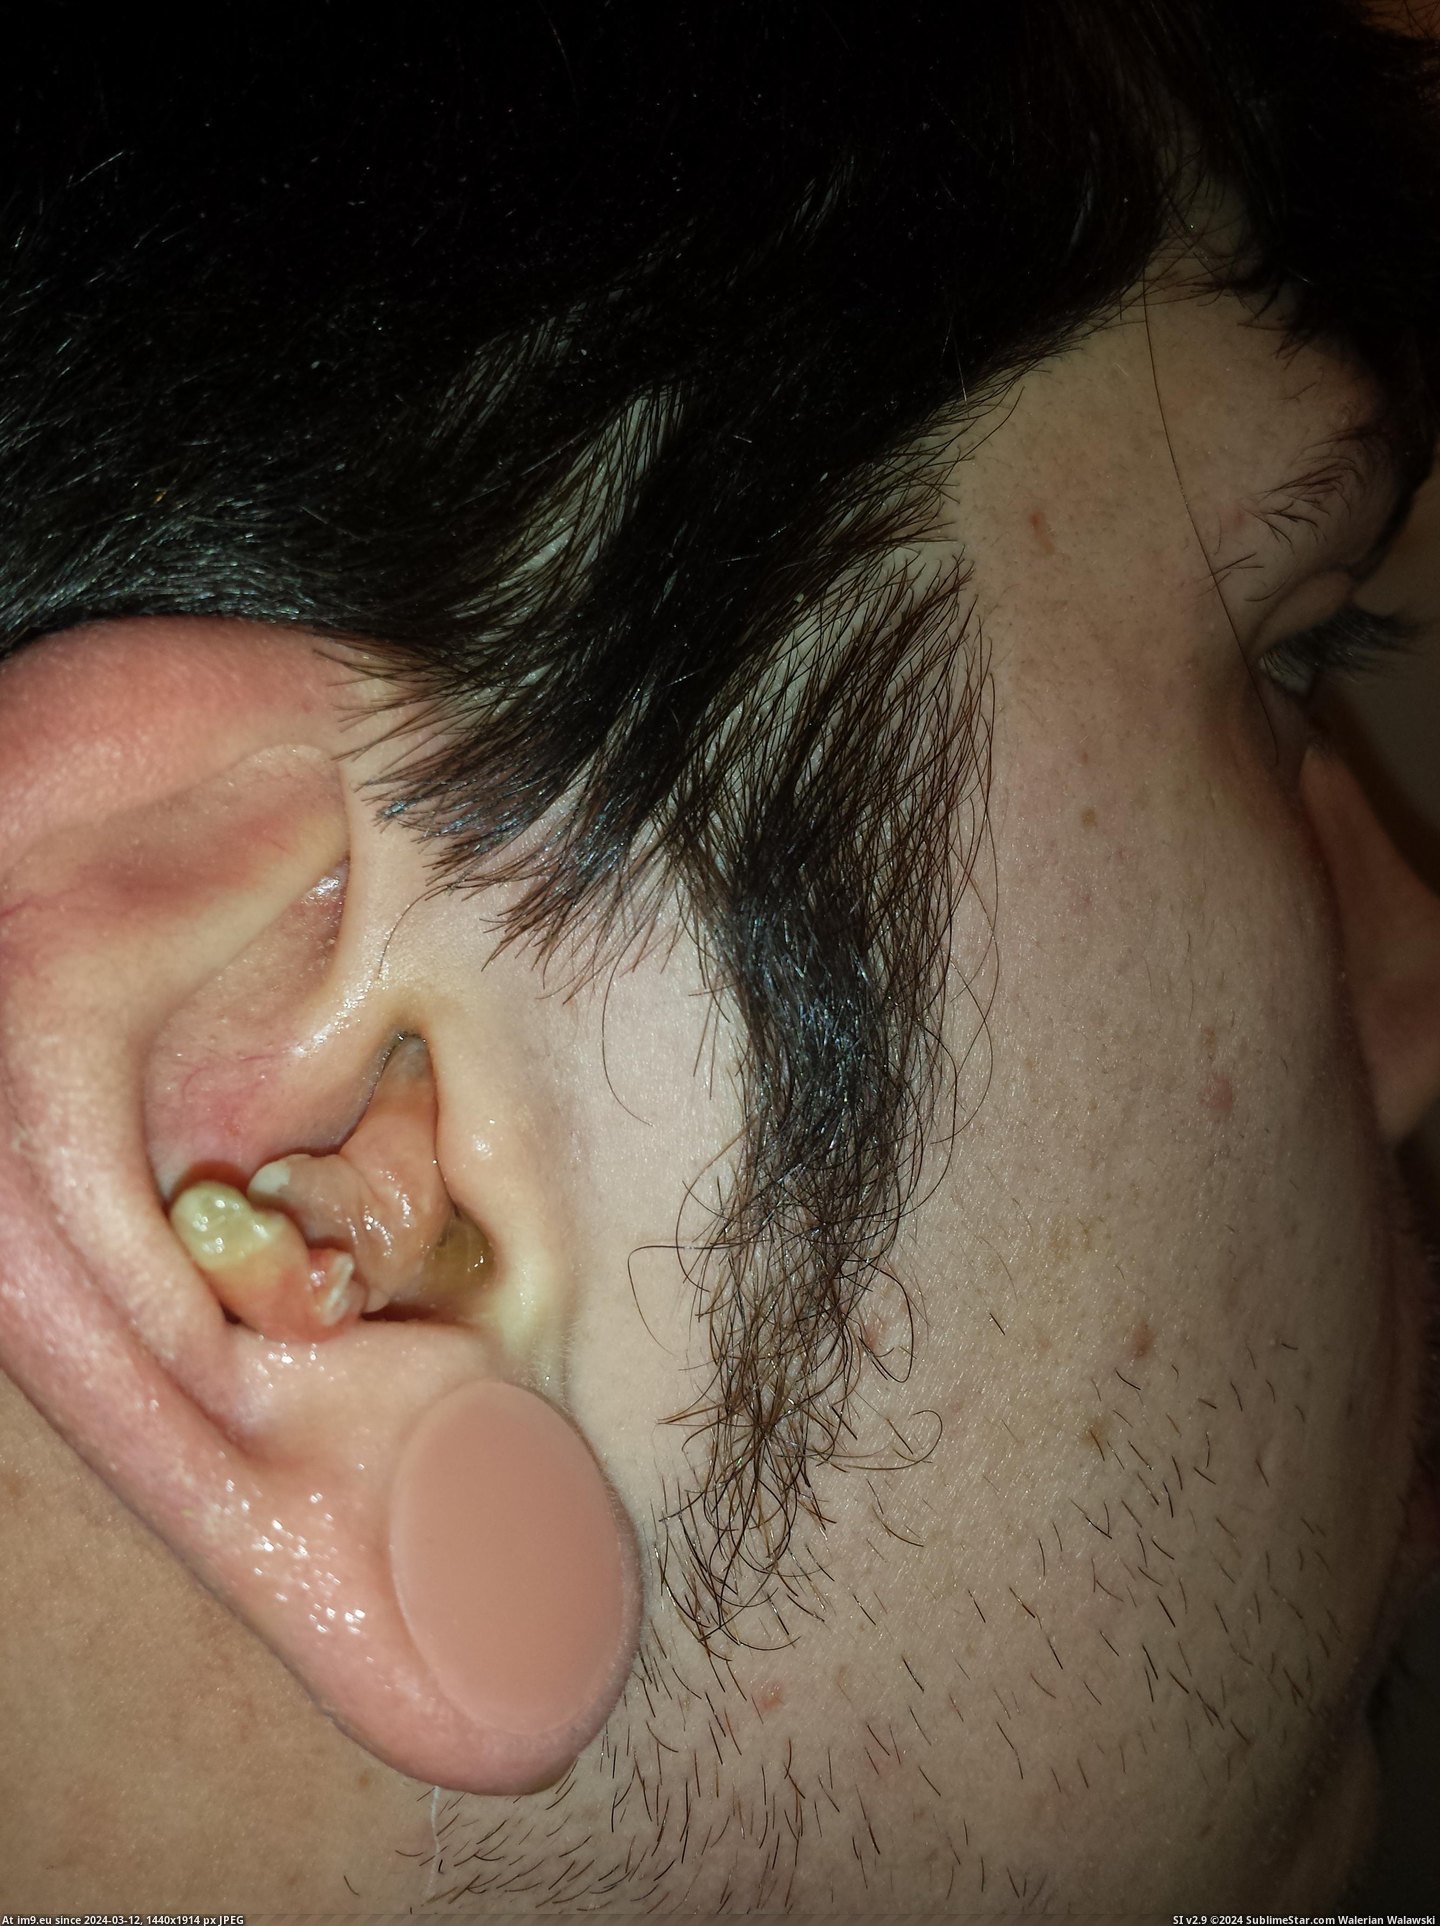 #Wtf #Ear #Infection #Crazy [Wtf] My crazy ear infection 13 Pic. (Bild von album My r/WTF favs))